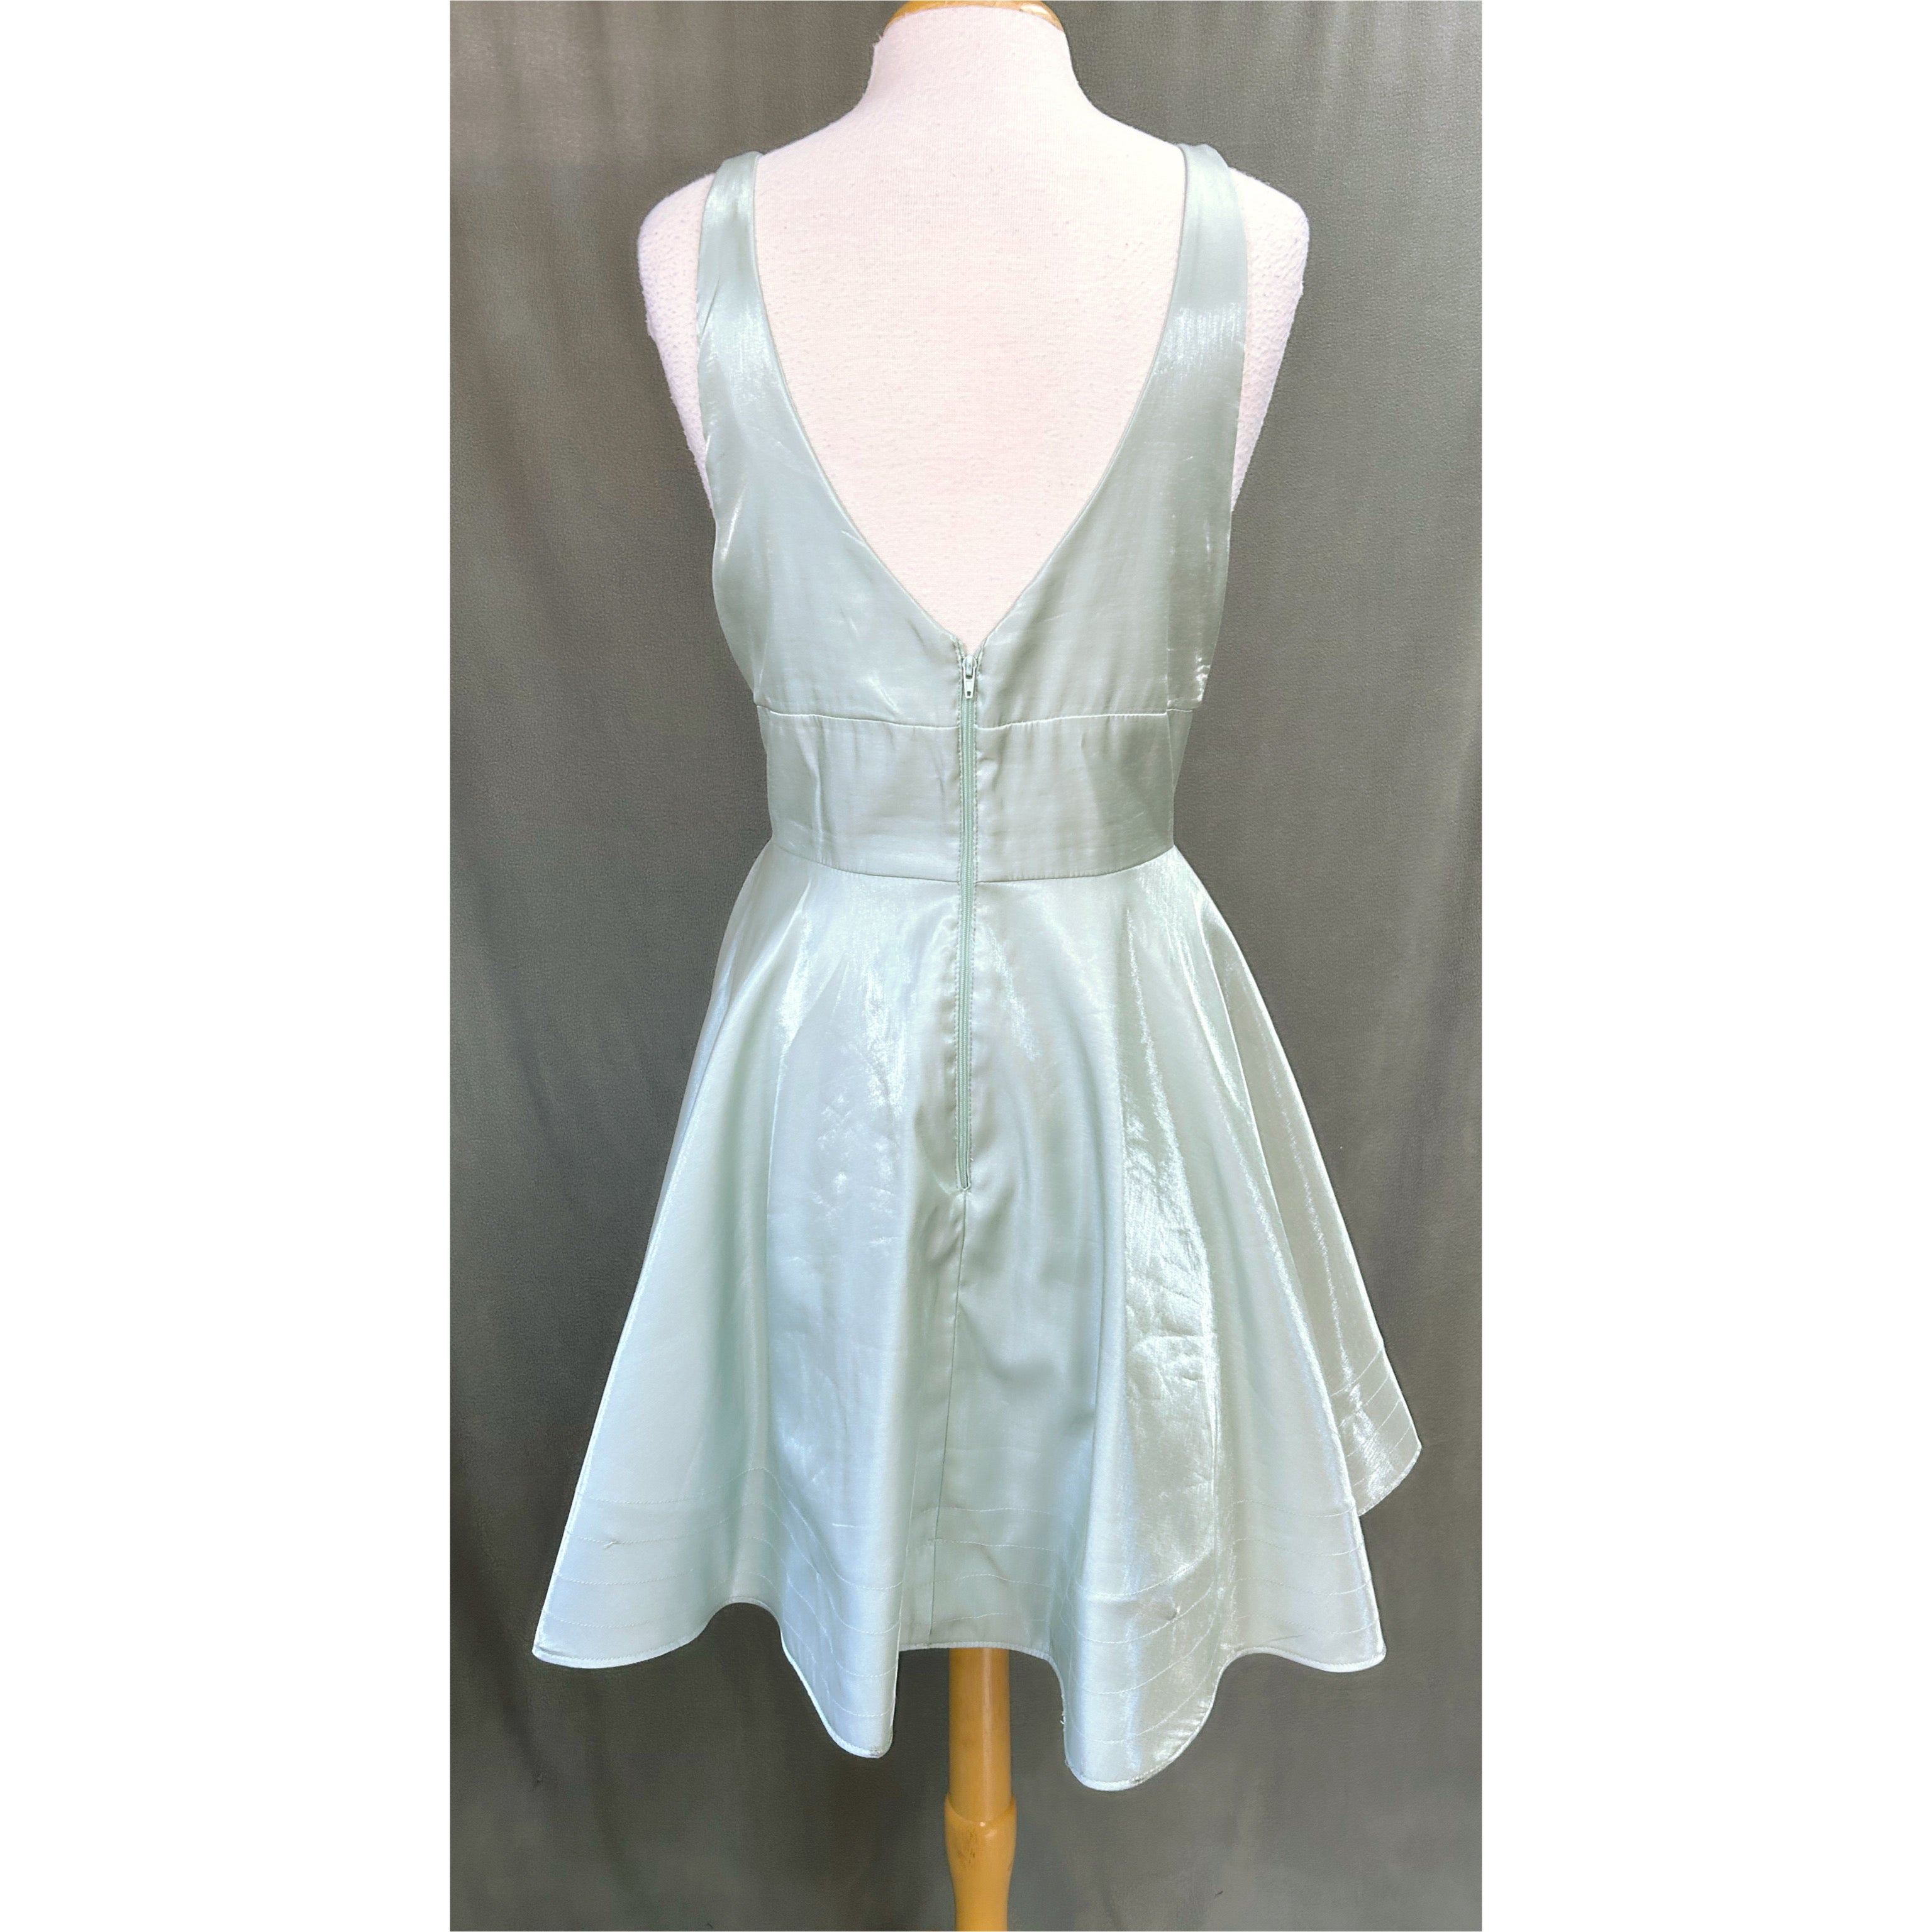 Sequin Hearts mint dress, size 15